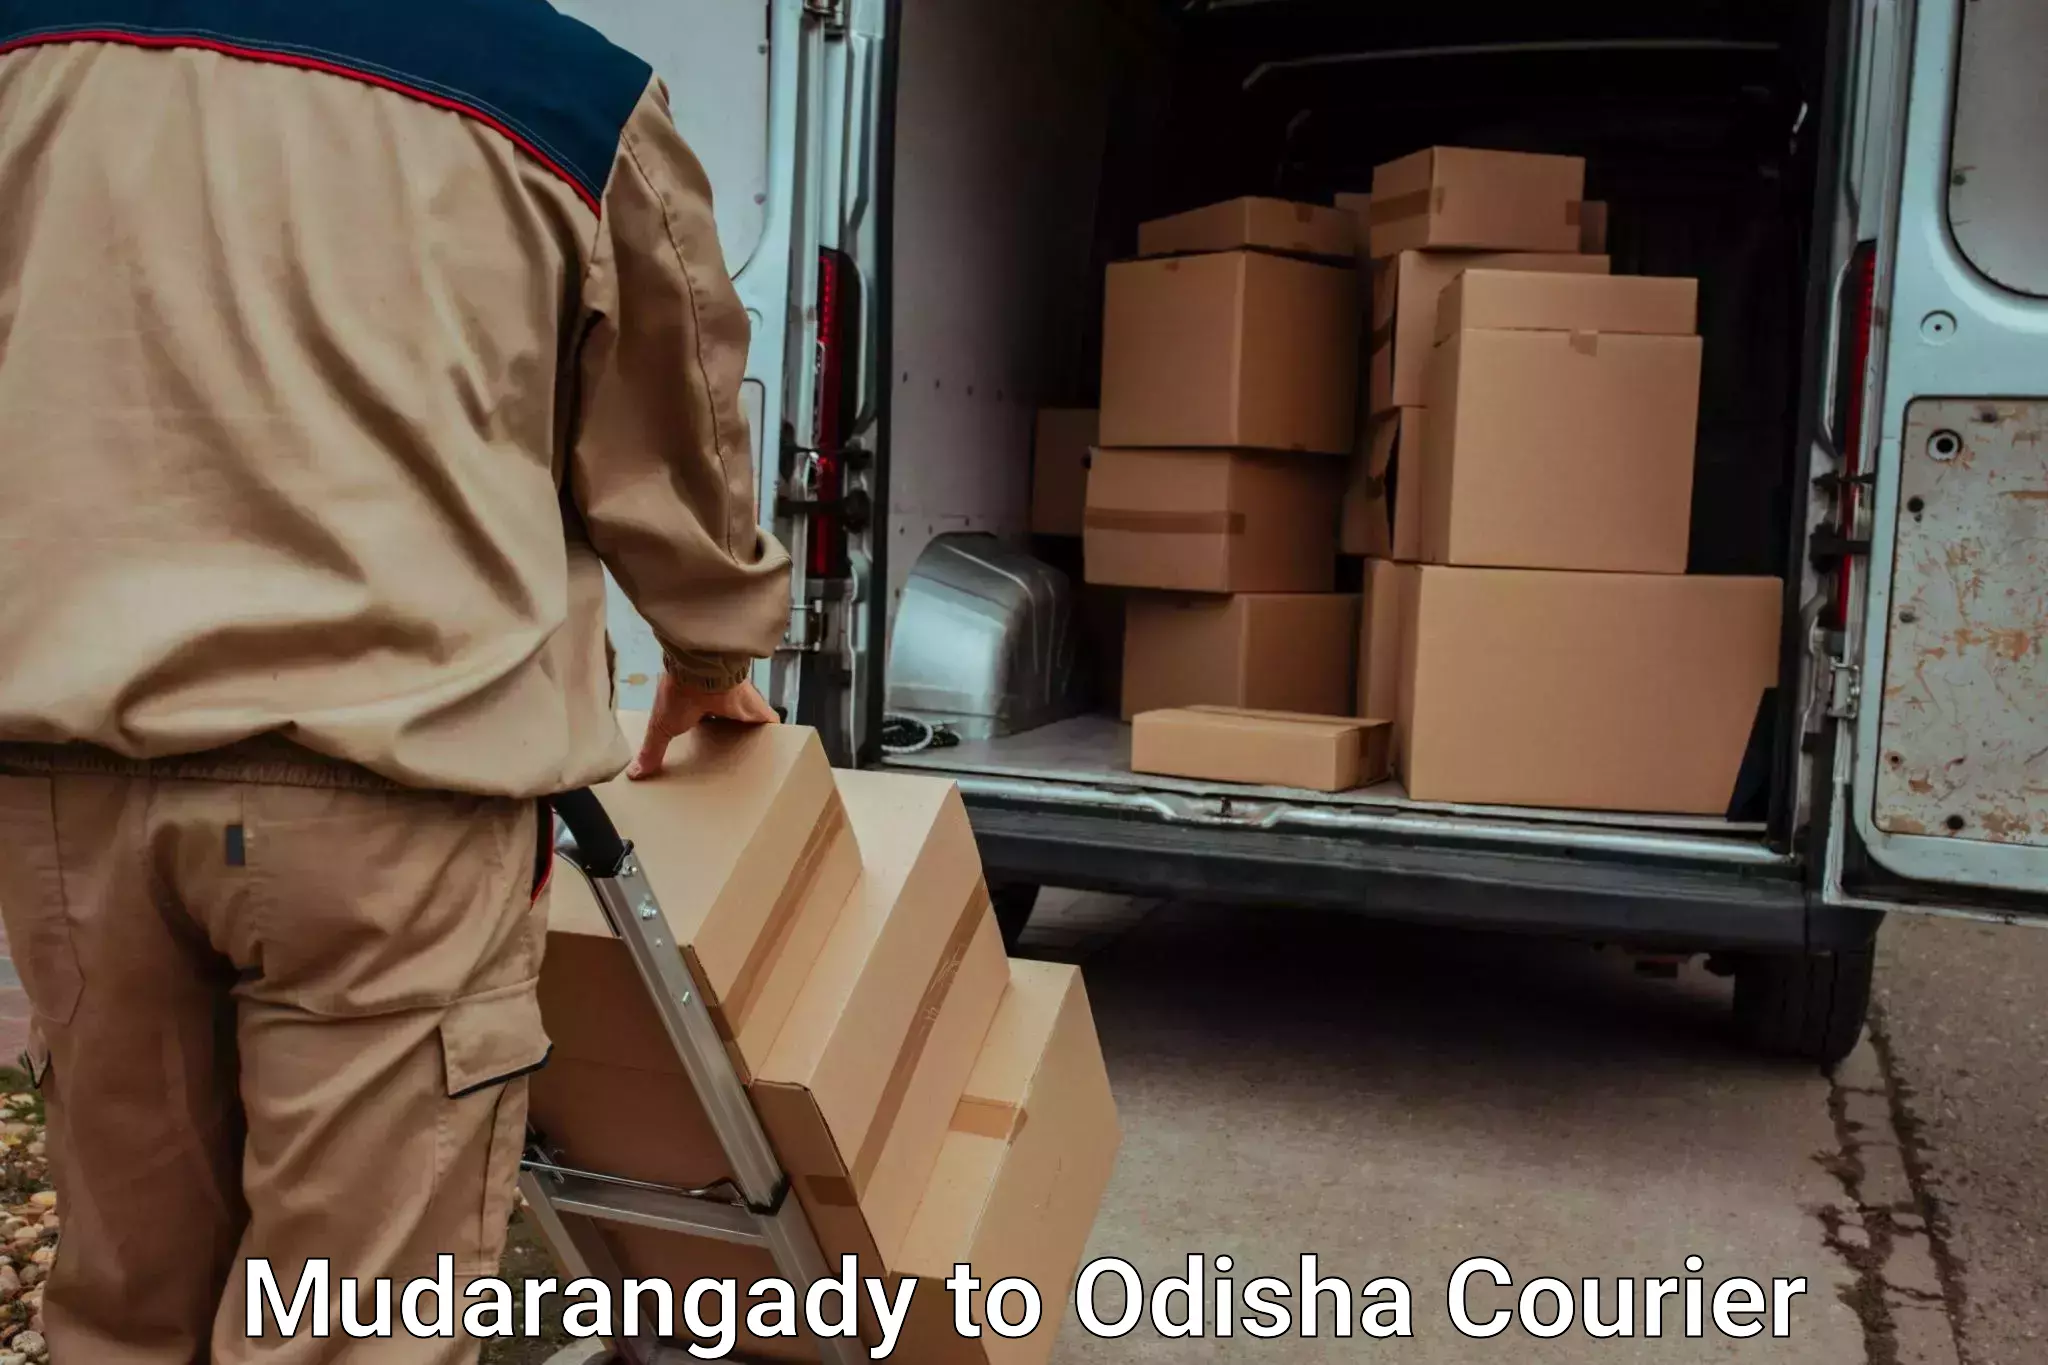 Professional moving company Mudarangady to Baleswar